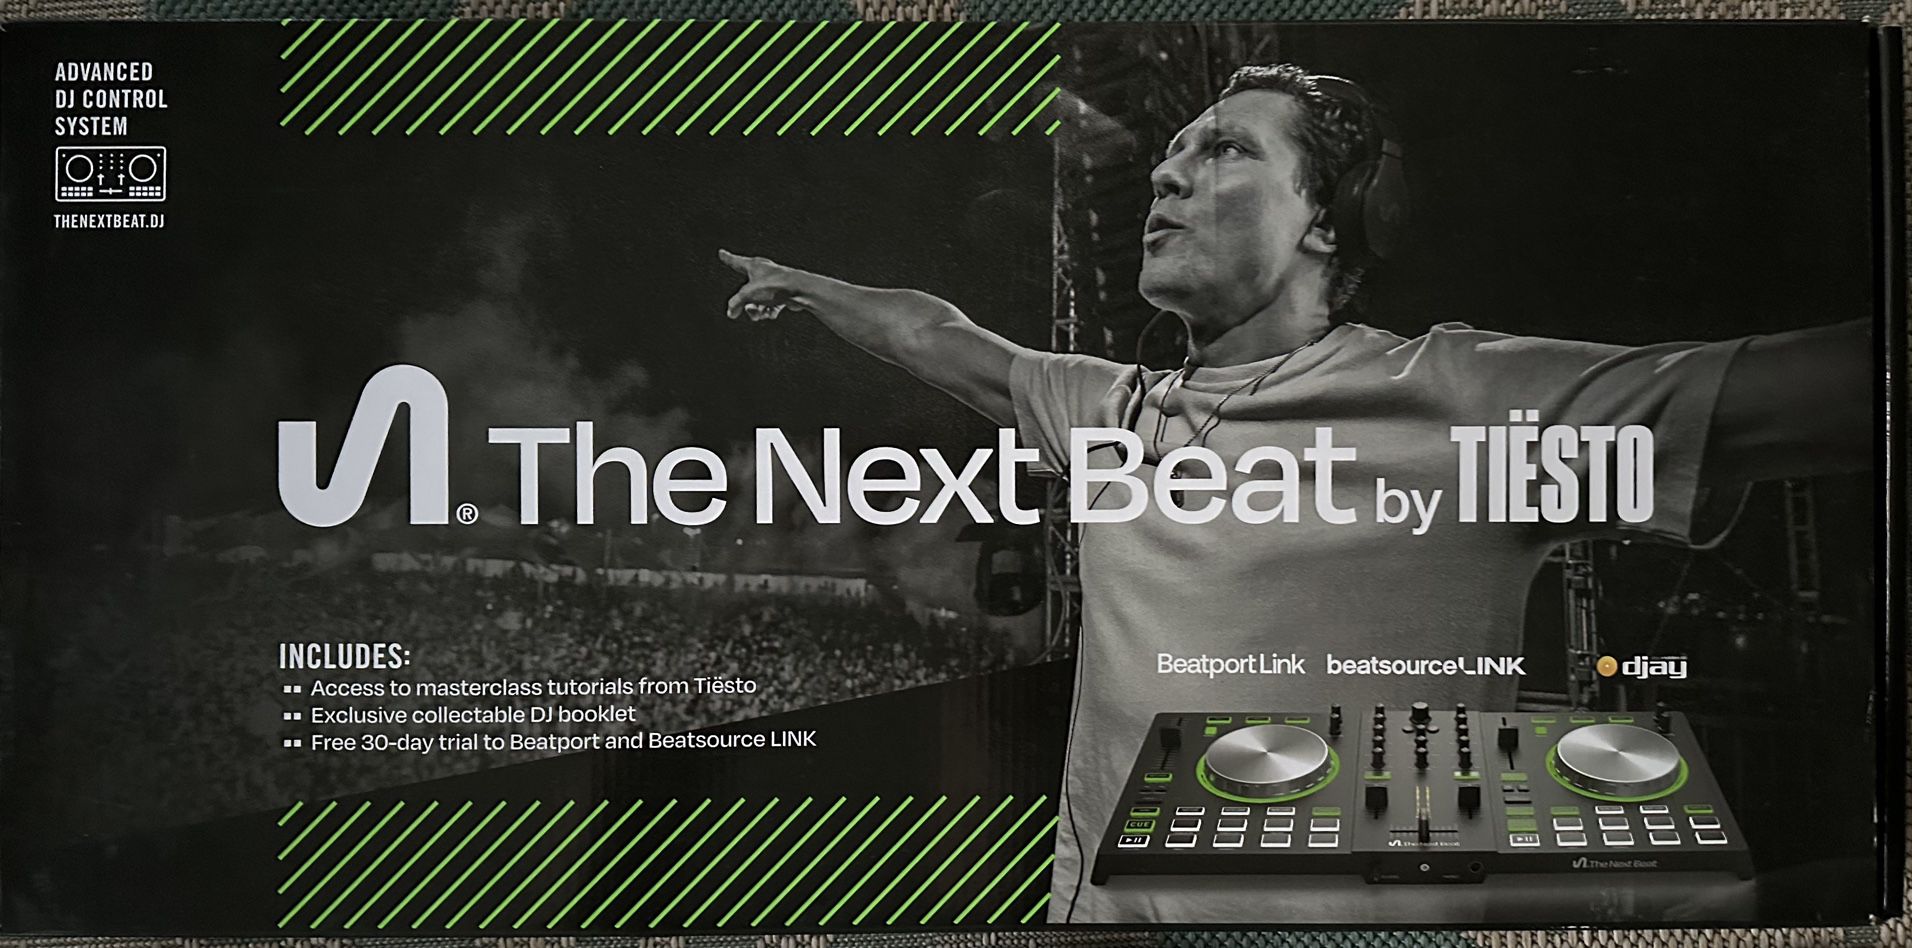 The Next Beat by Tiesto DJ Learning Decks For Beginners, DJ Controller, DJ Mixer 